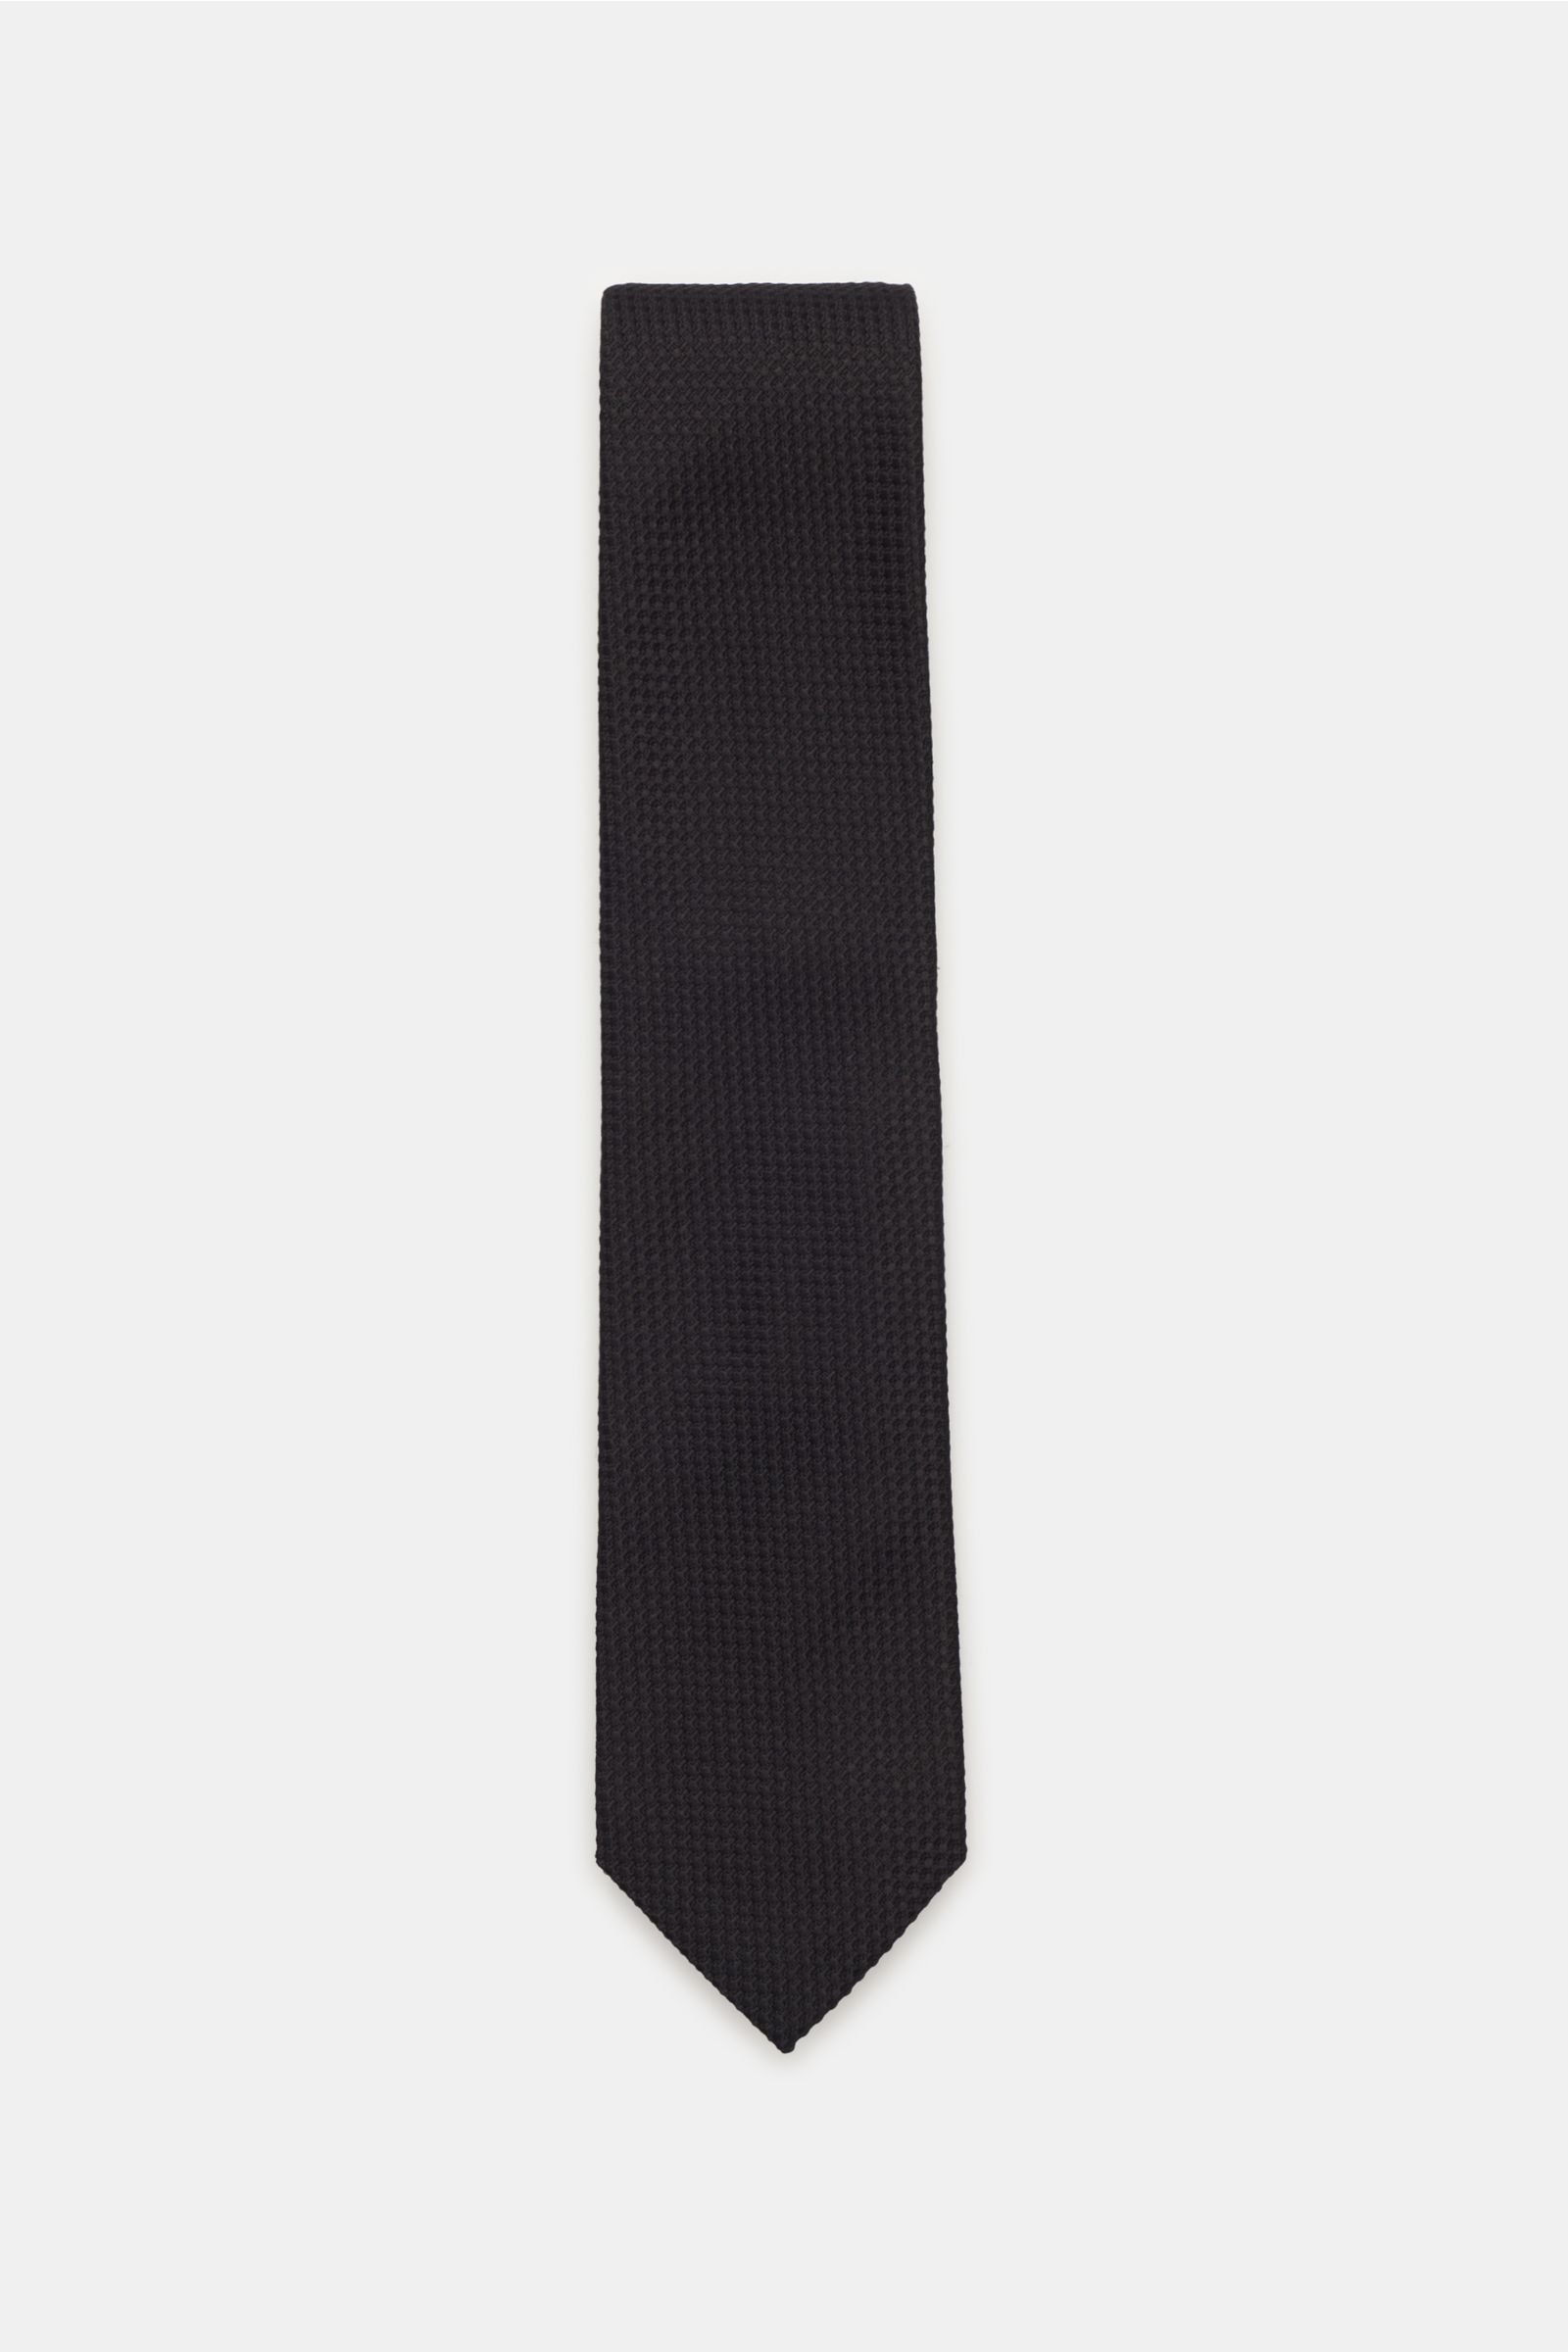 Silk tie black patterned